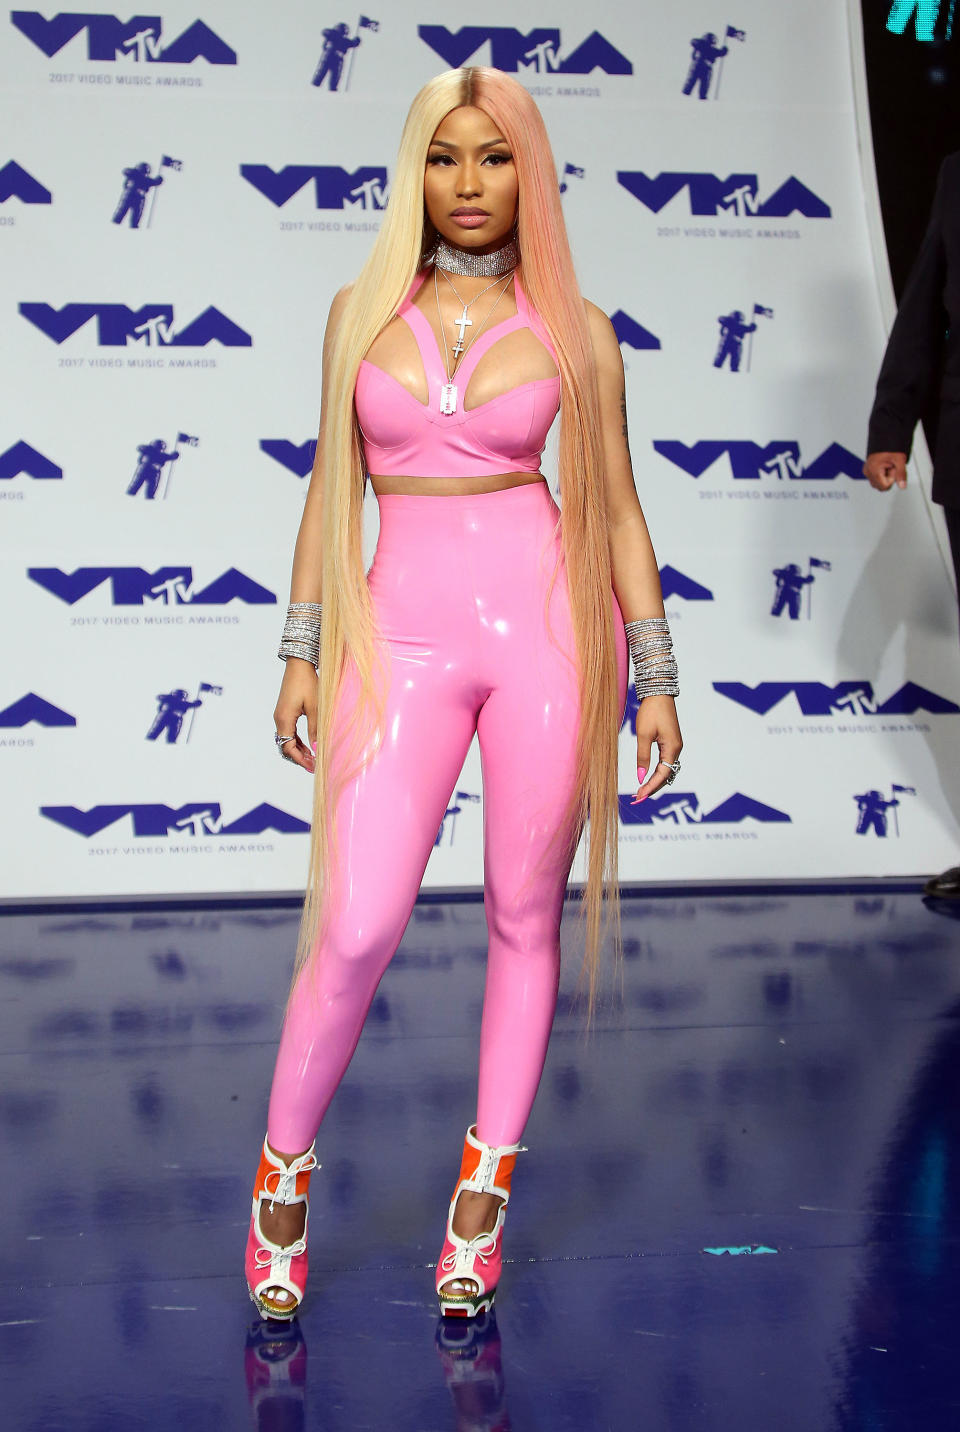 27 August 2017 - Los Angeles, California - Nicki Minaj. 2017 MTV Video Music Awards held at The Forum. Photo Credit: F. Sadou/AdMedia Newscom/(Mega Agency TagID: admphotostwo398434.jpg) [Photo via Mega Agency]